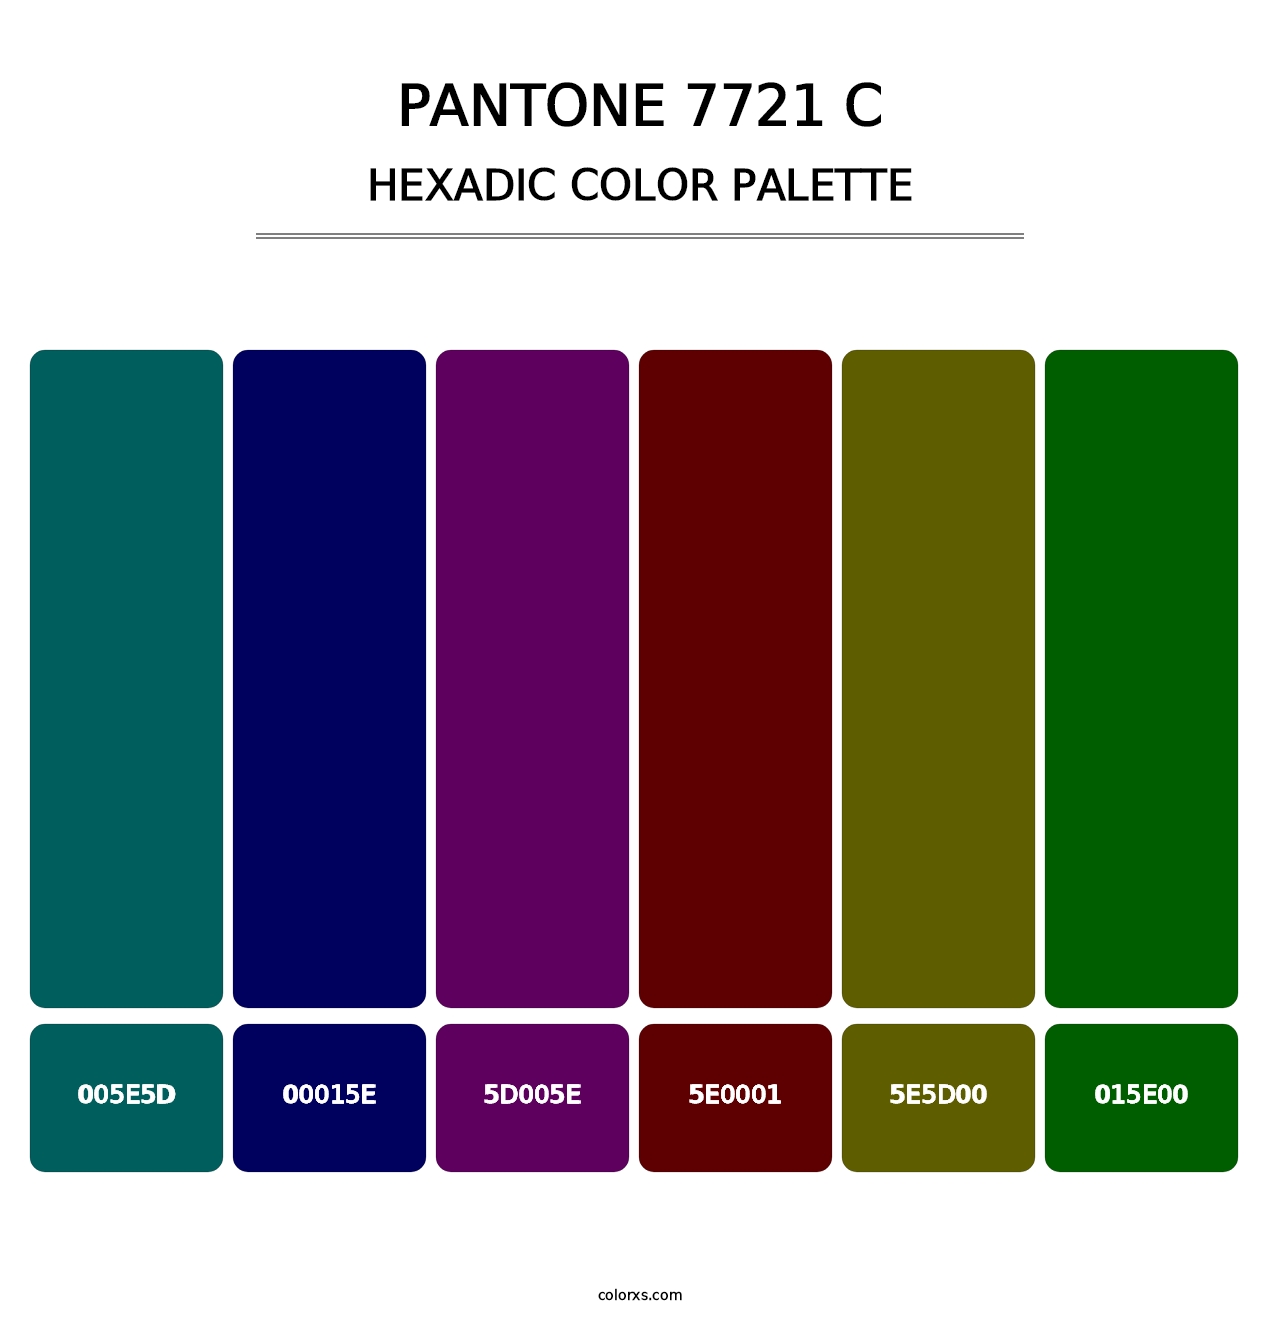 PANTONE 7721 C - Hexadic Color Palette